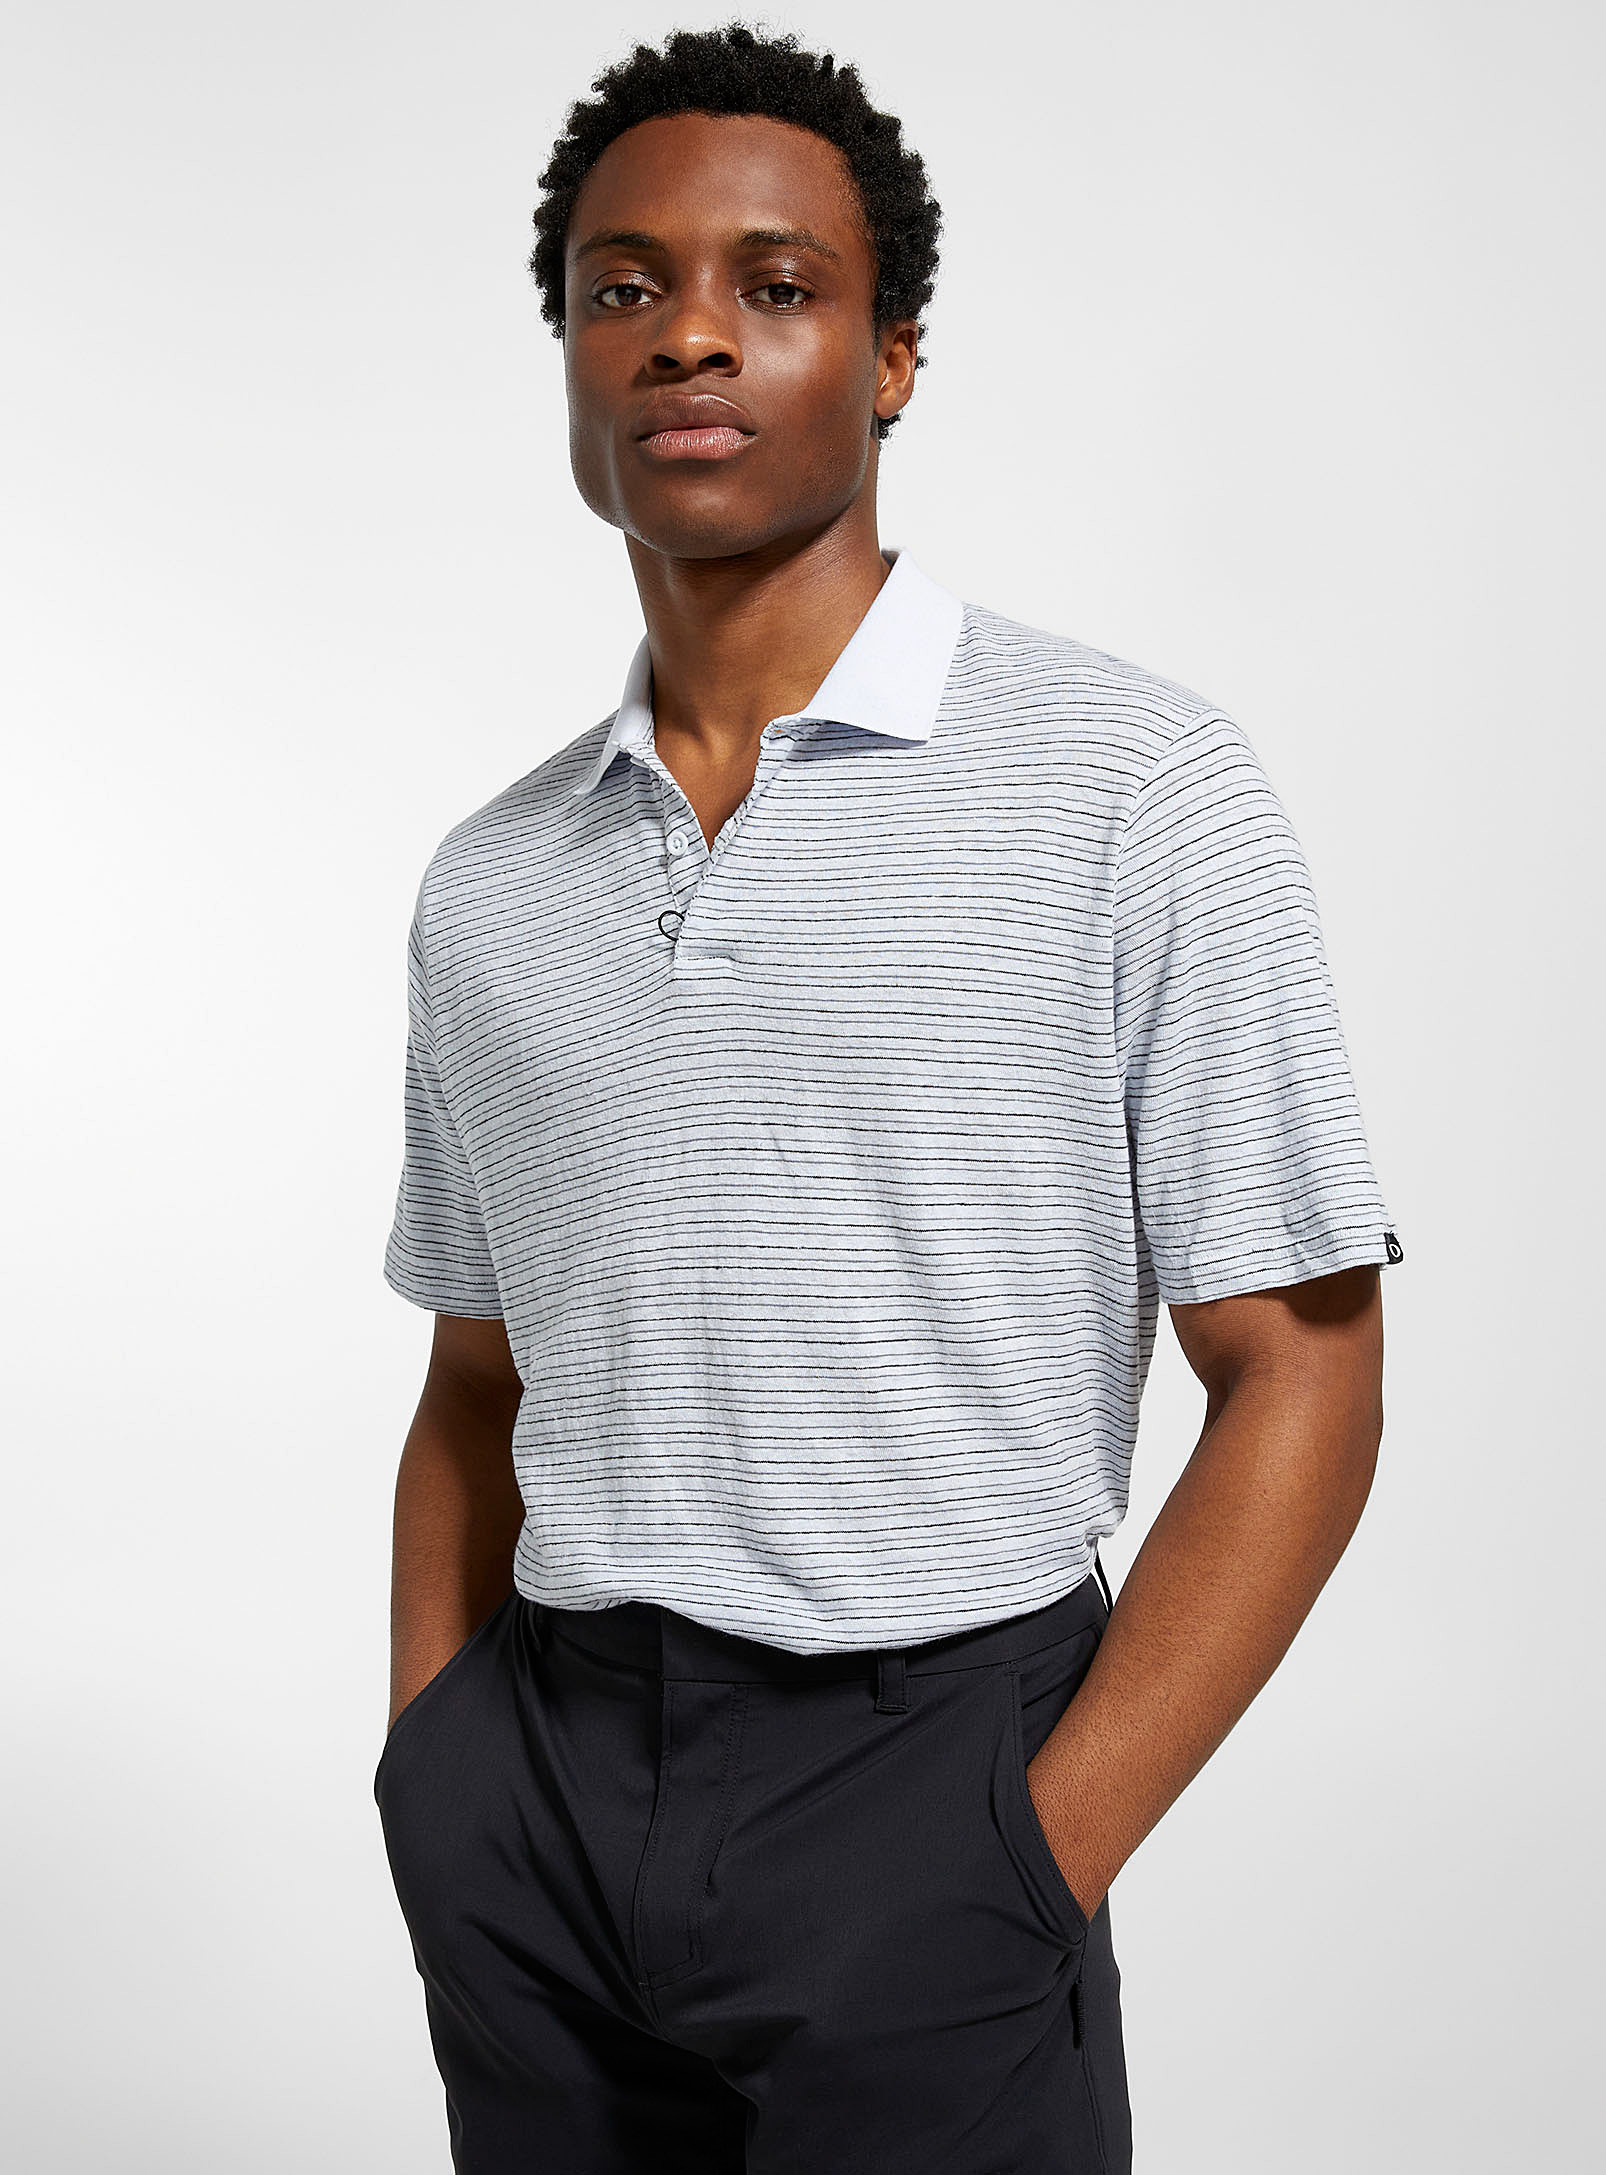 Oakley - Men's Cotton and hemp striped golf Polo Shirt